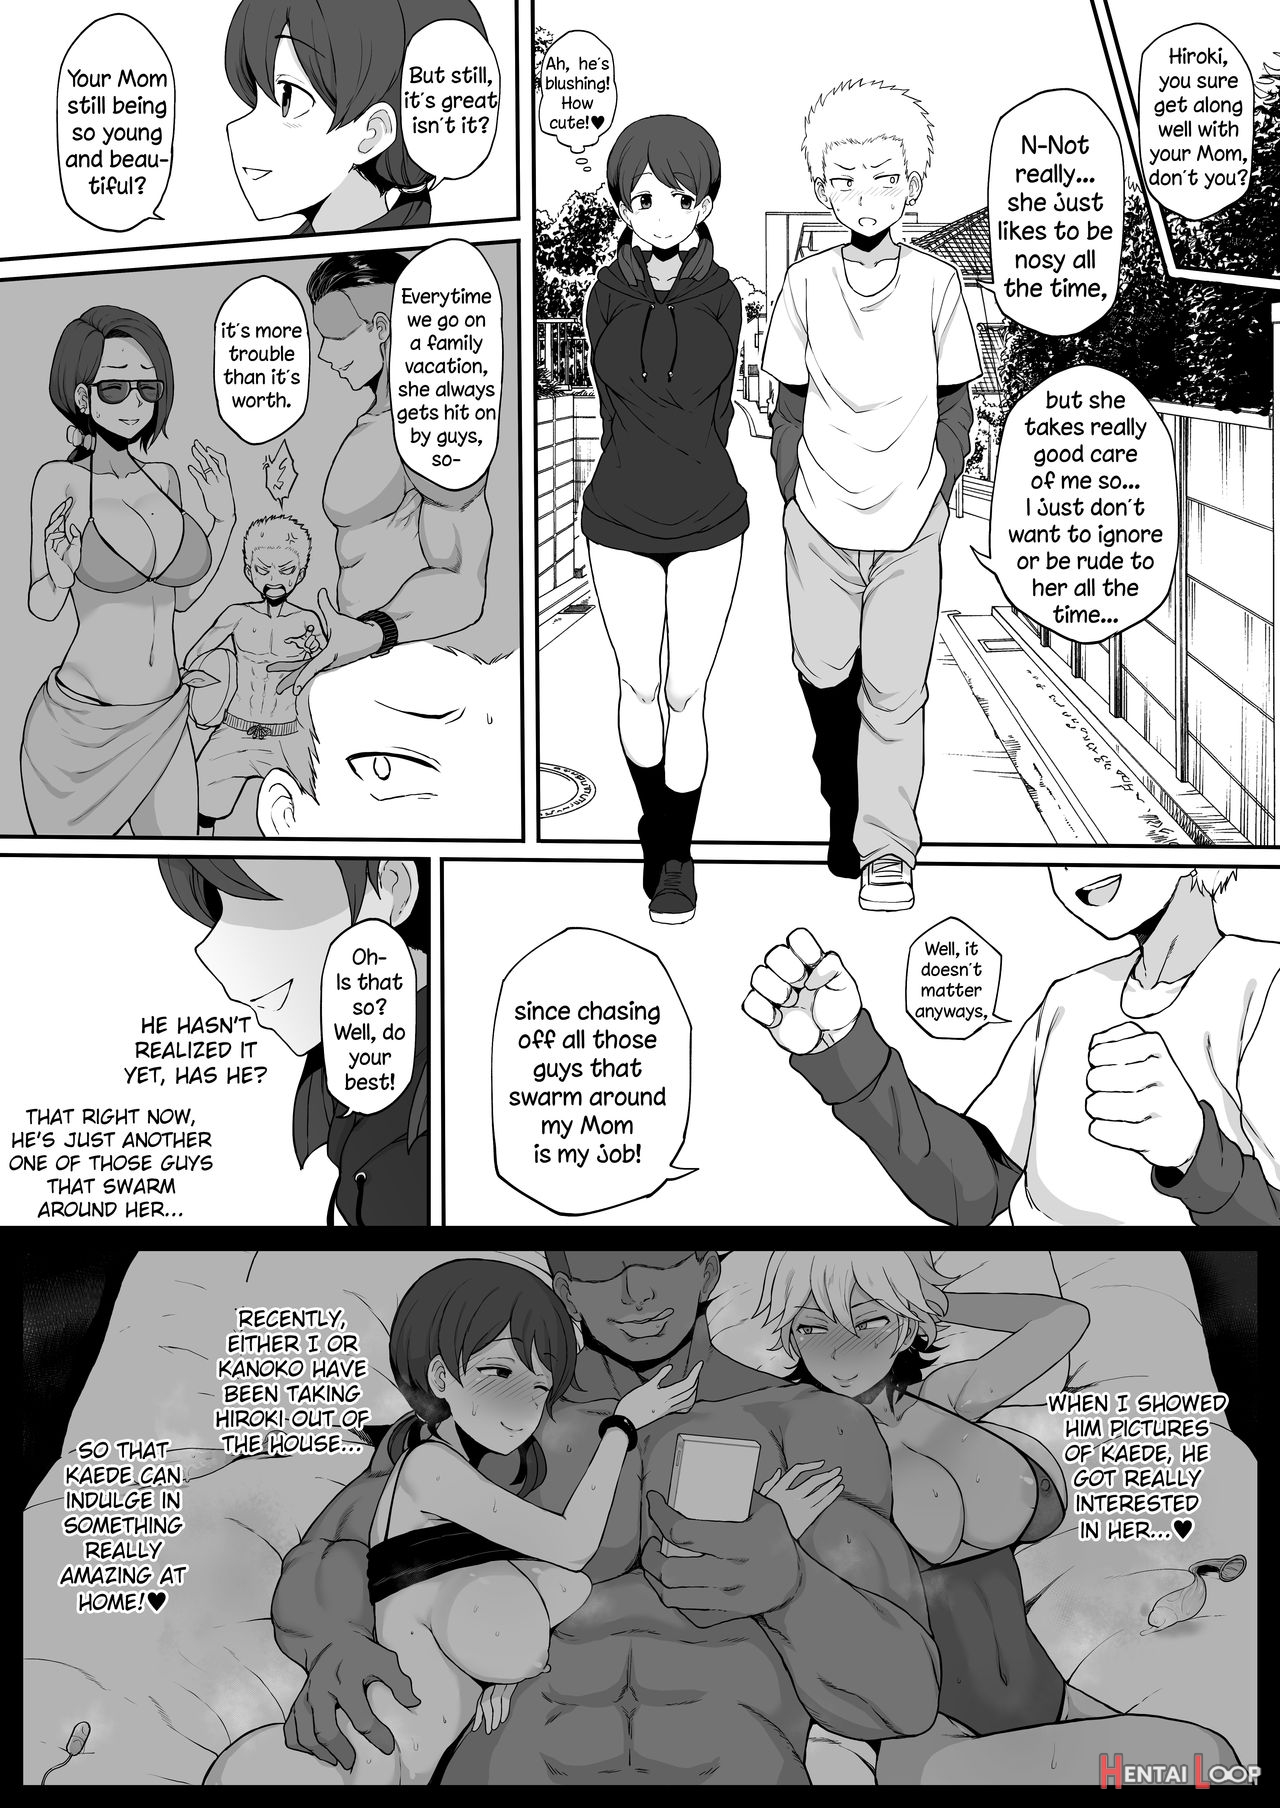 Kokujin No Tenkousei Ntr Ru Chapters 1-6 Part 1 Plus Bonus Chapter: Stolen Mother’s Breasts page 13